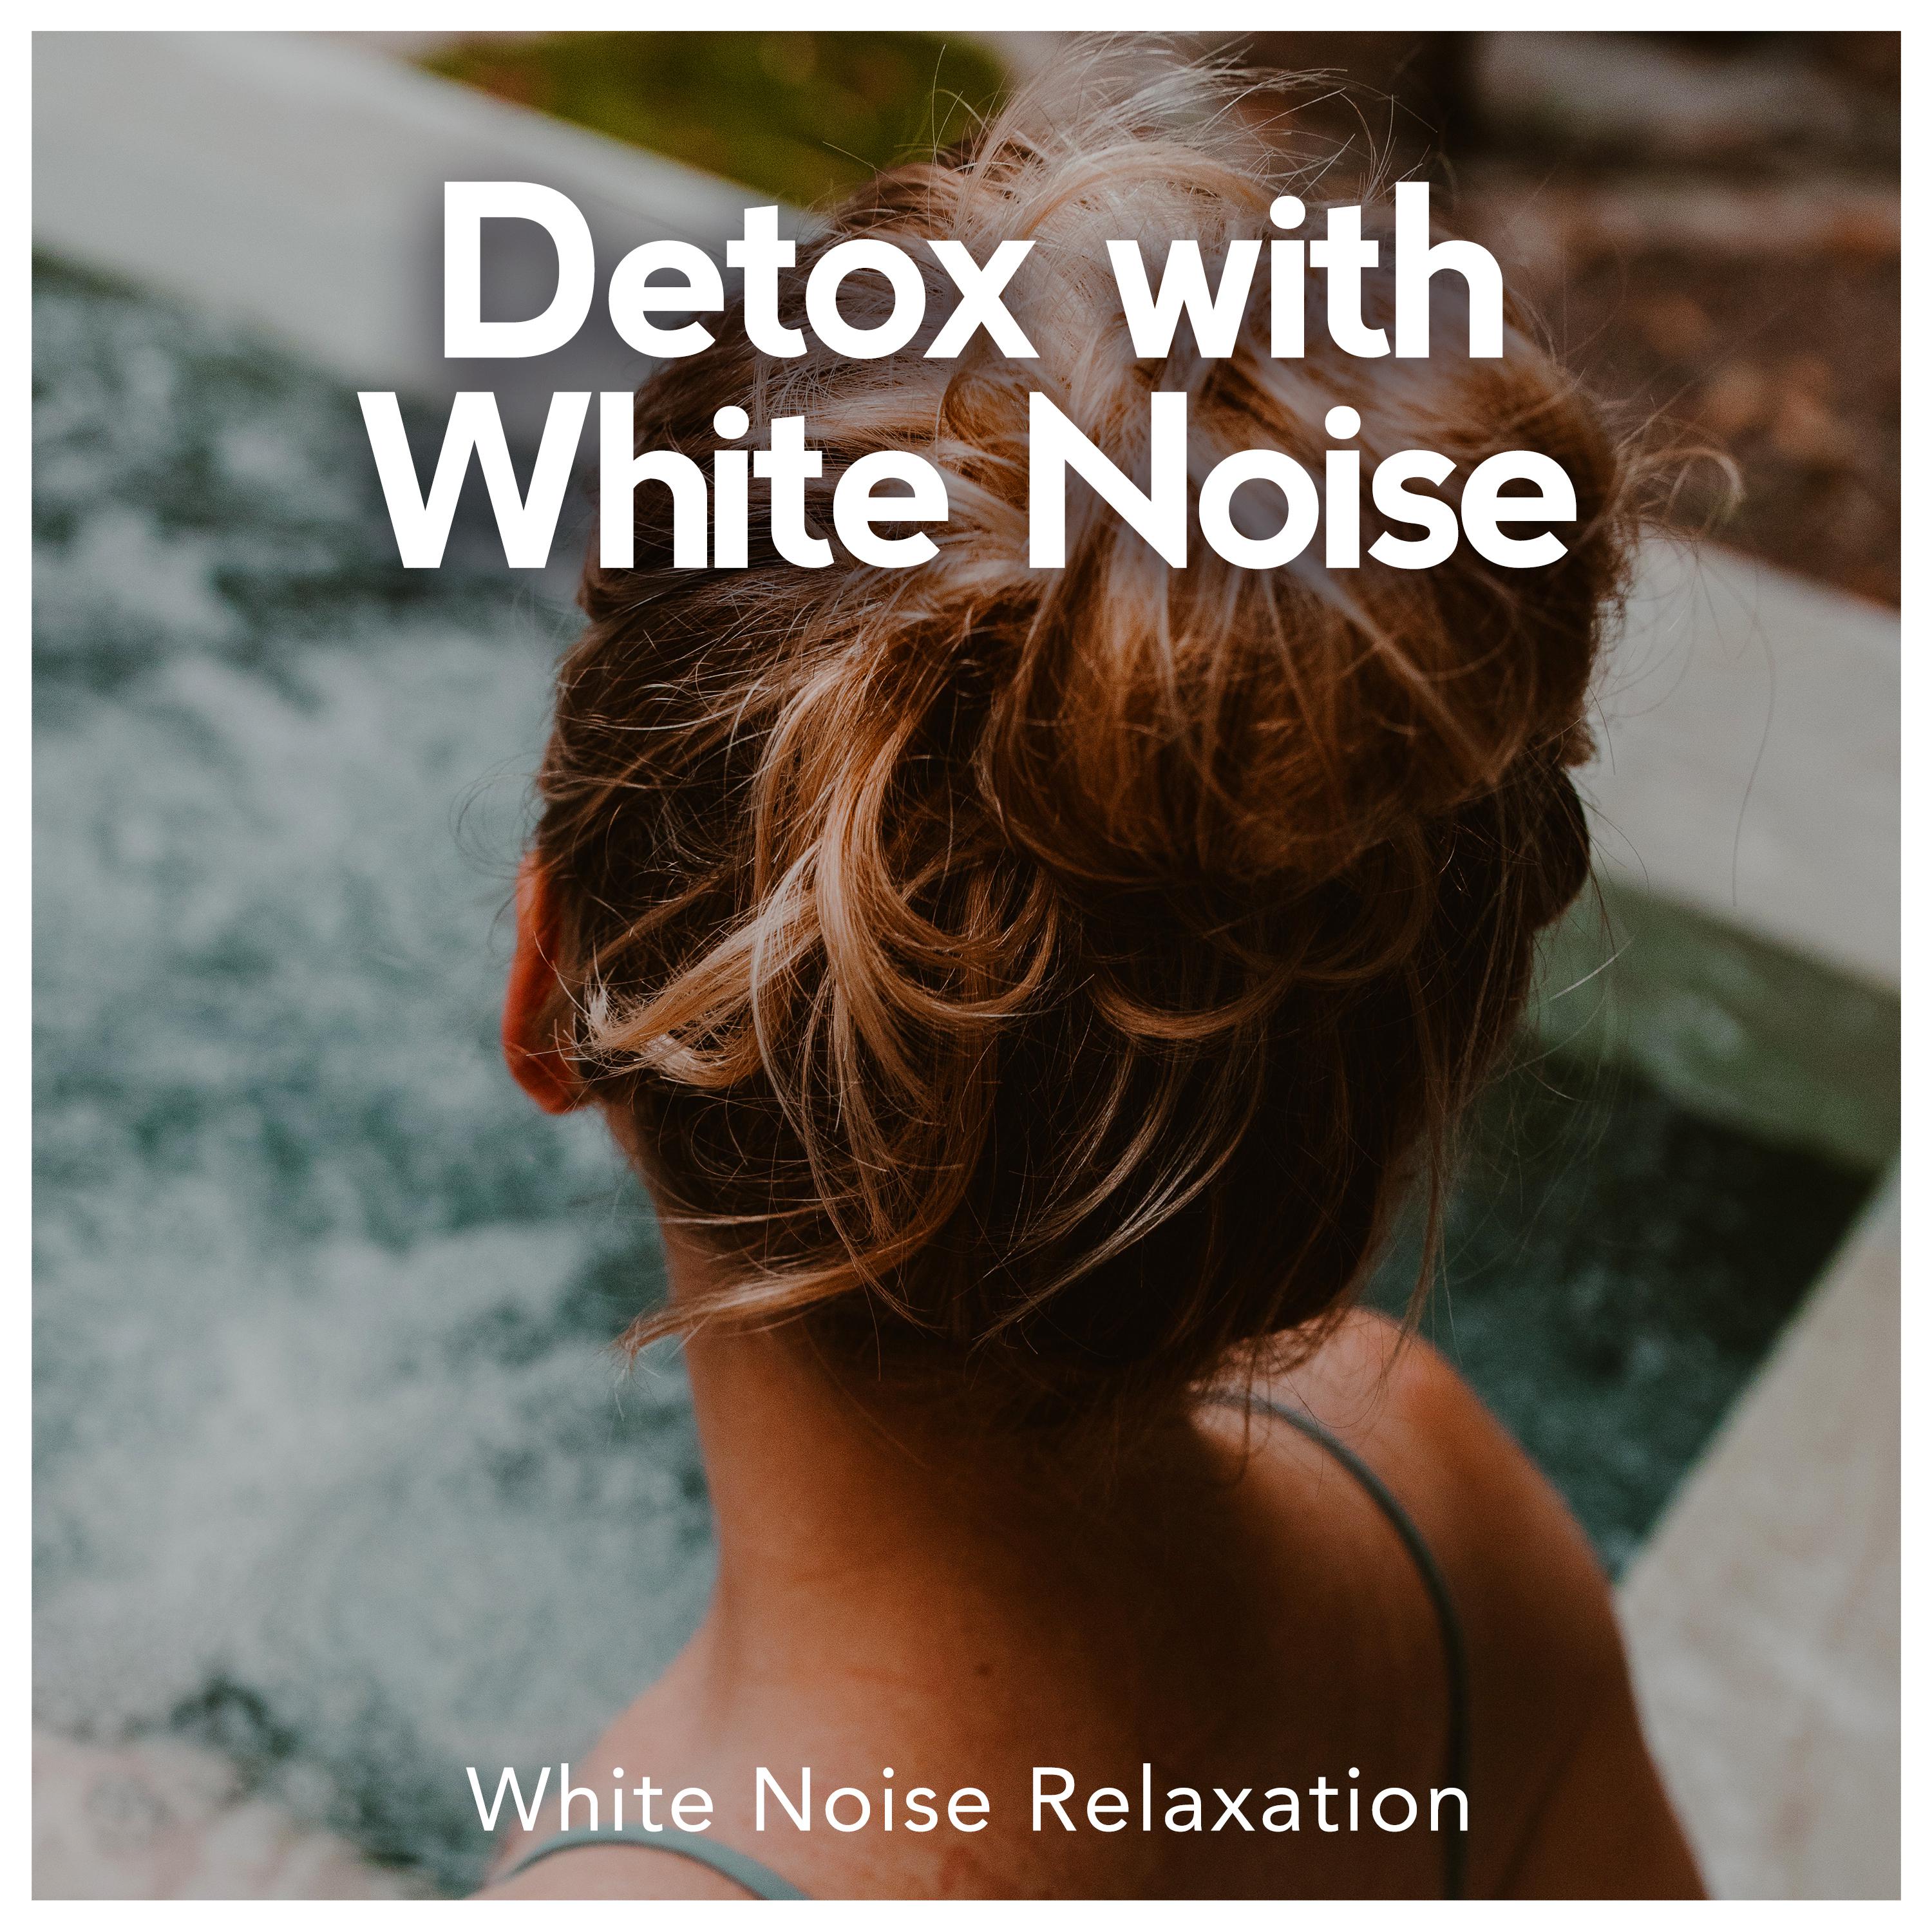 Detox with White Noise